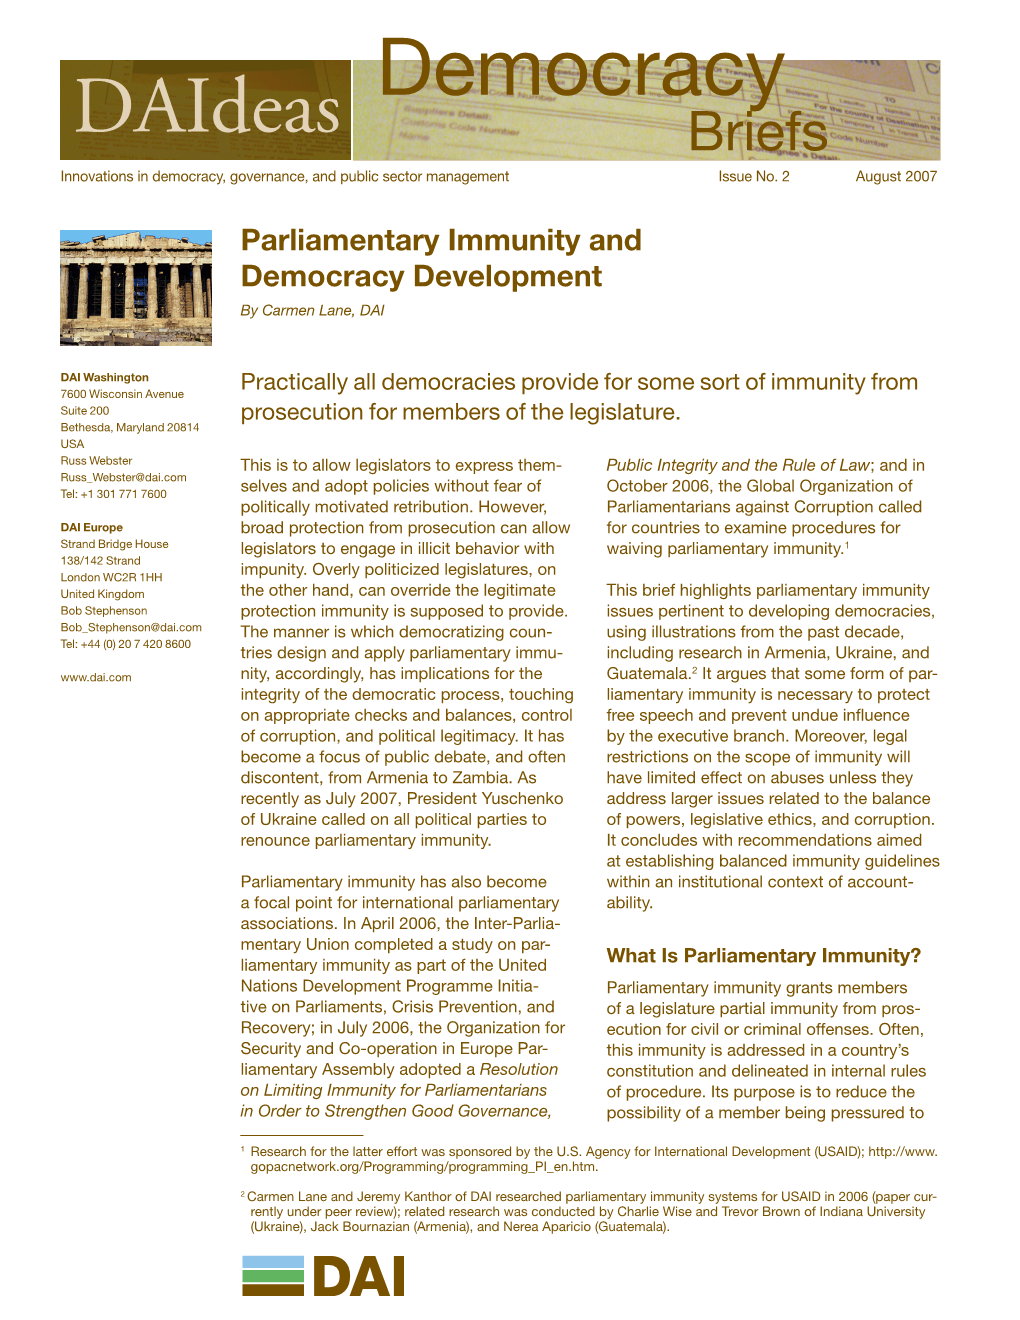 Parliamentary Immunity and Democracy Development by Carmen Lane, DAI